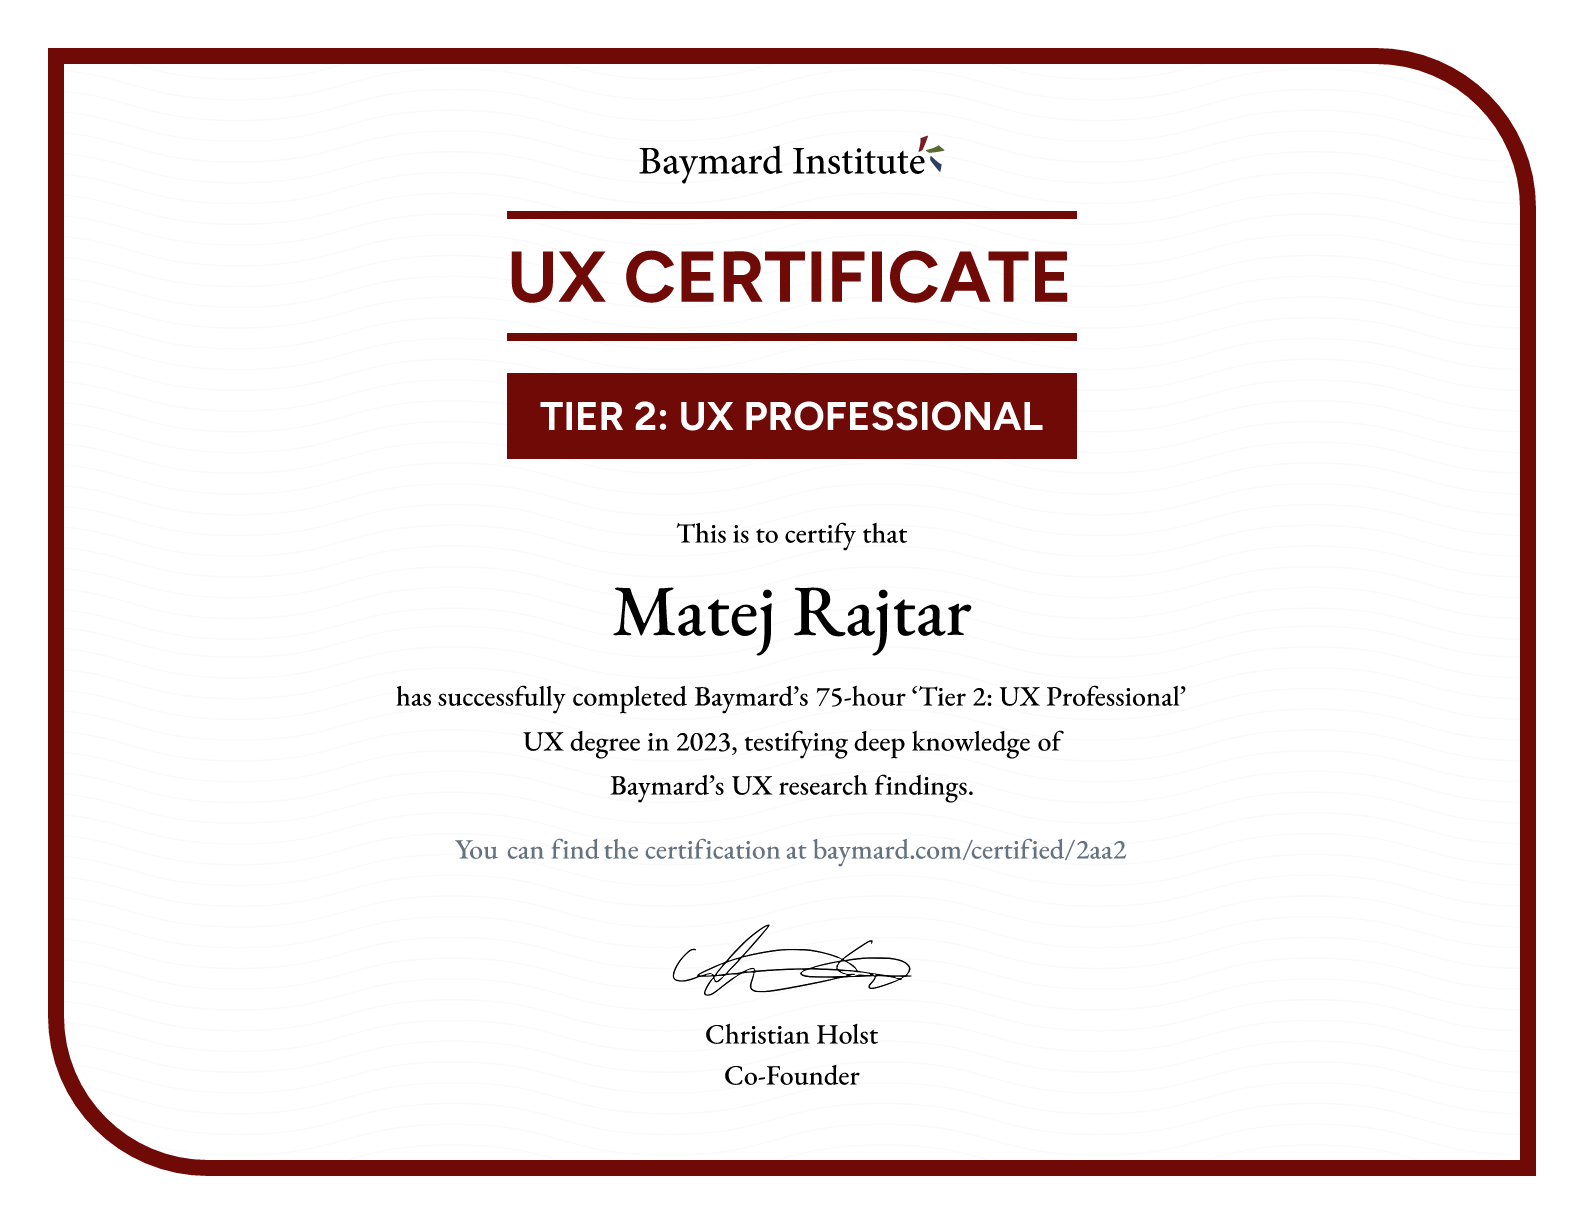 Matej Rajtar’s certificate